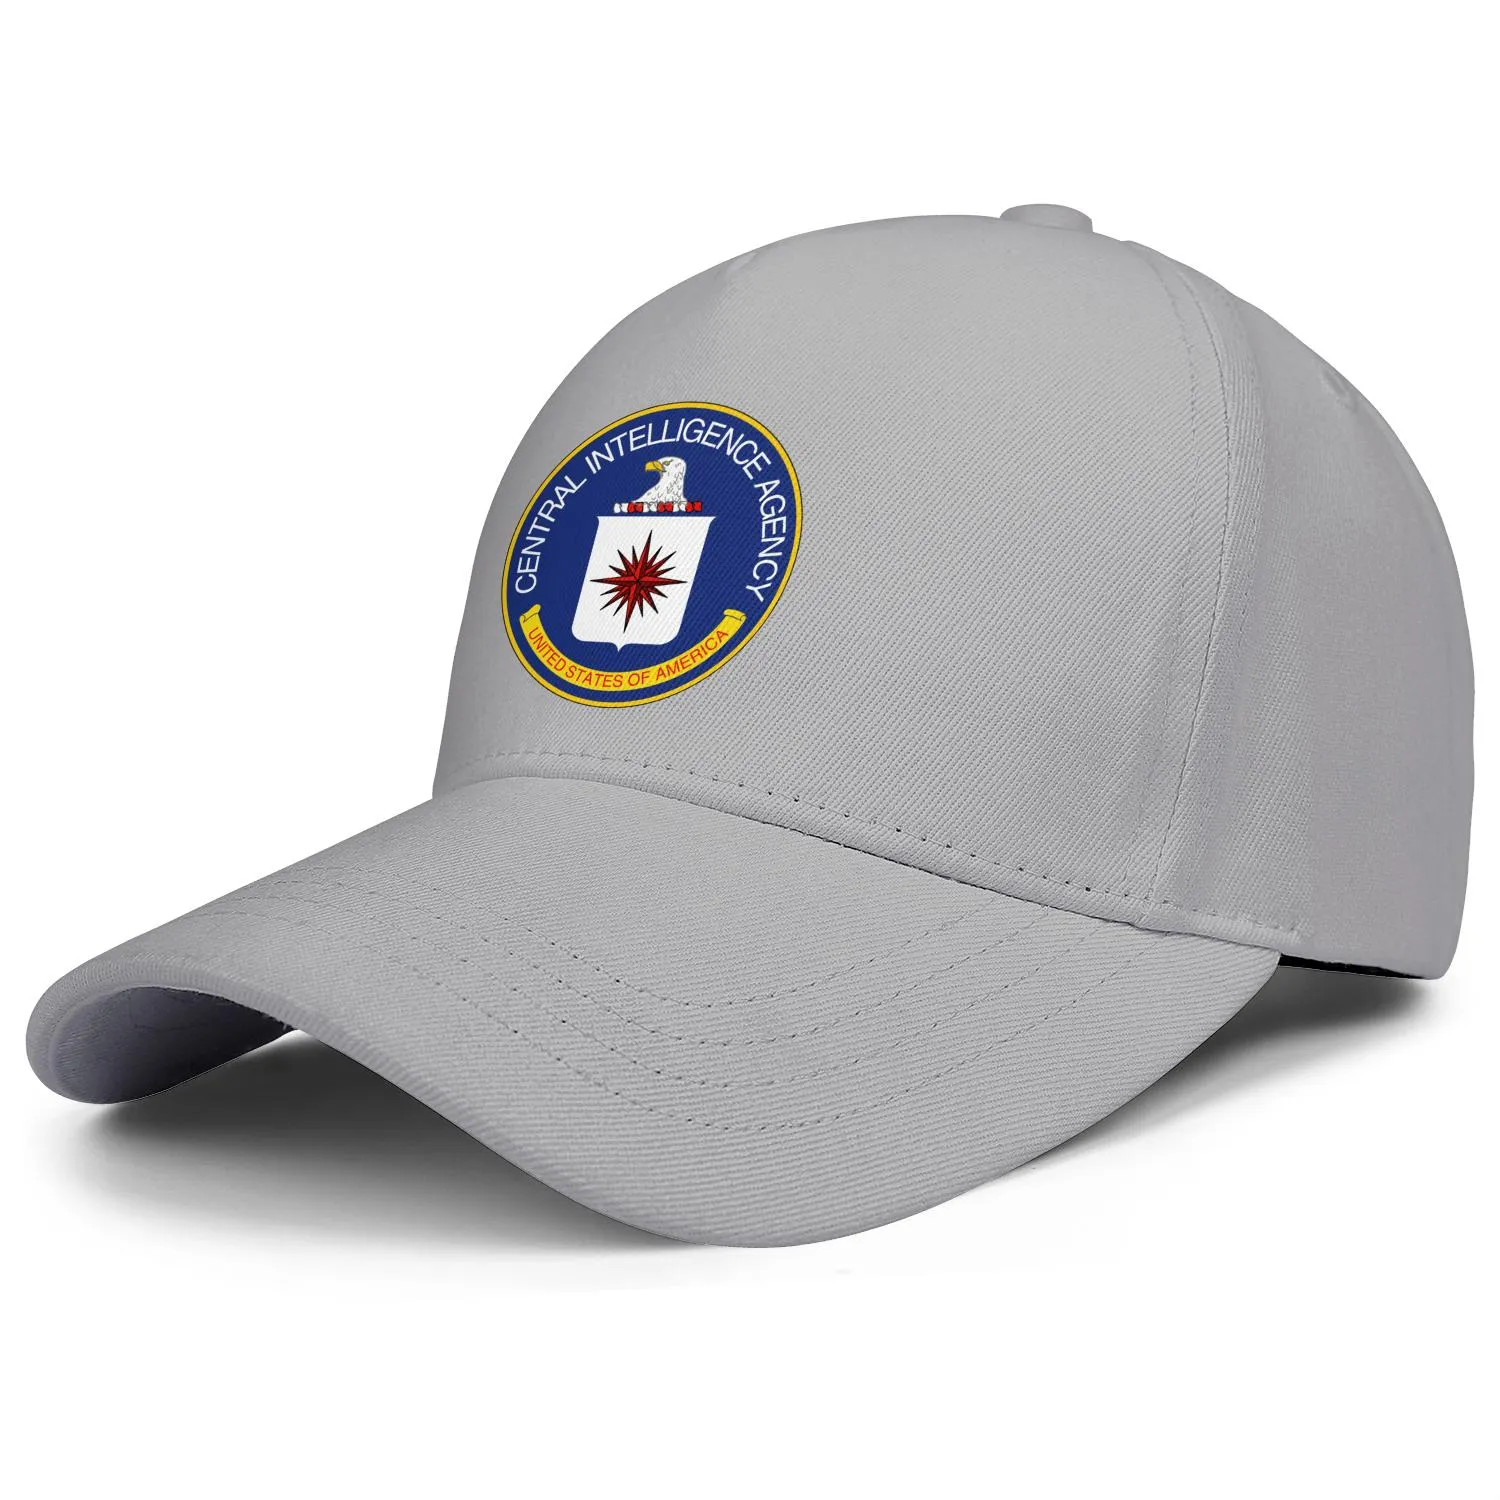 Central Intelligence Agency Logo mens and women adjustable trucker cap cool vintage personalized original baseballhats223m3172127